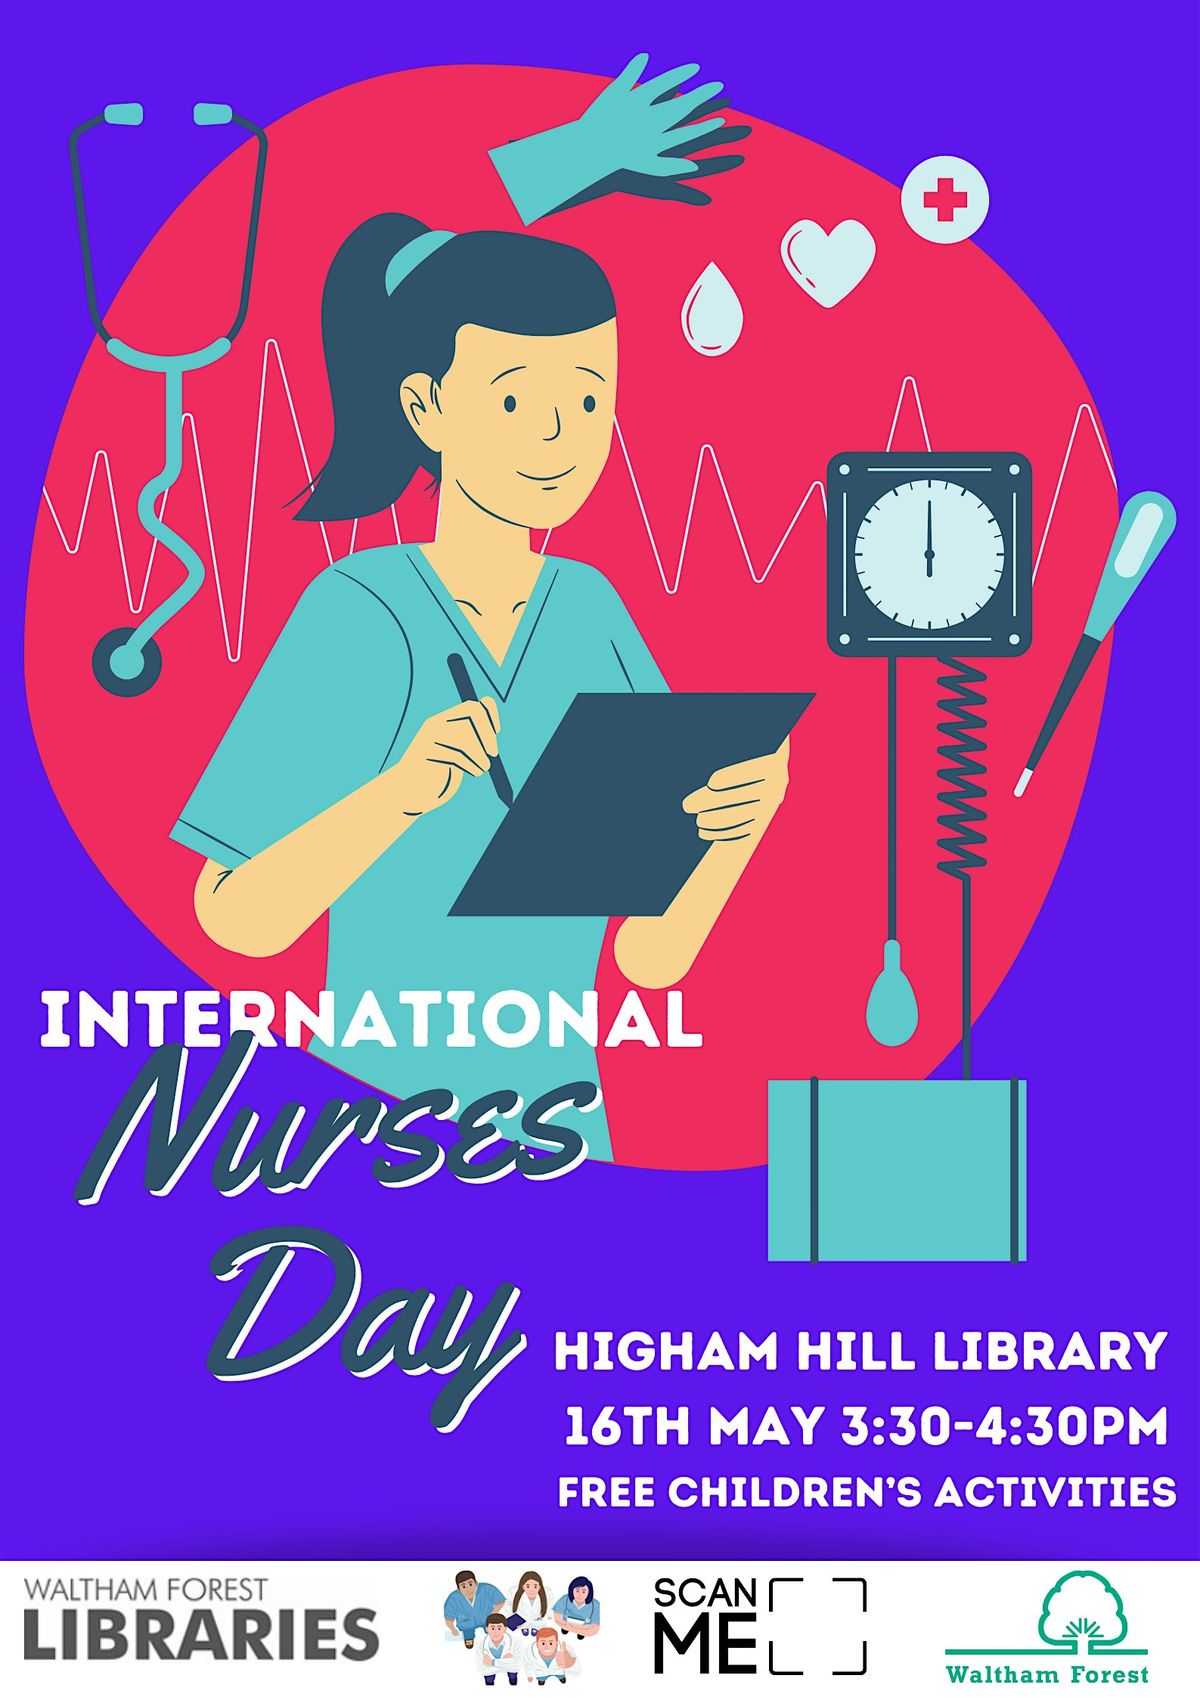 International Nurses Day @ Higham Hill library